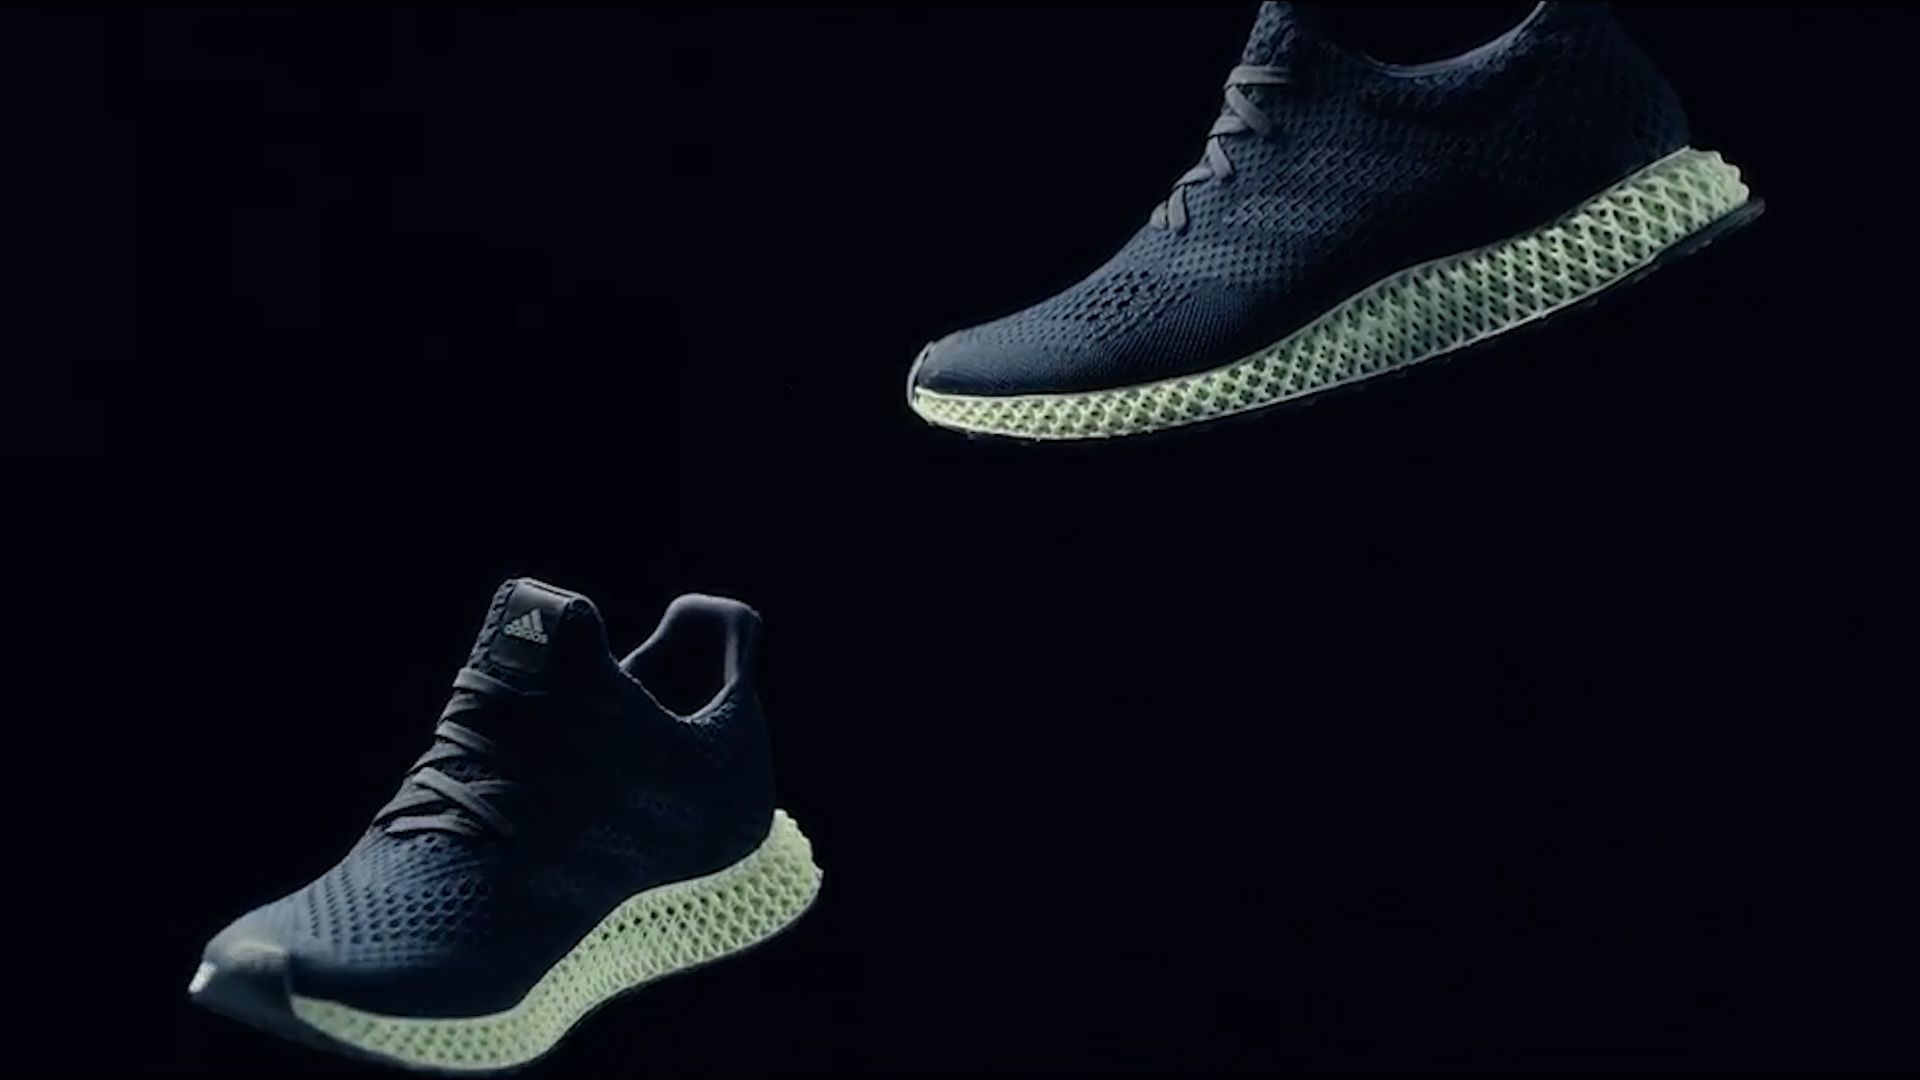 unveils new 3D printed sneaker | CNN Business